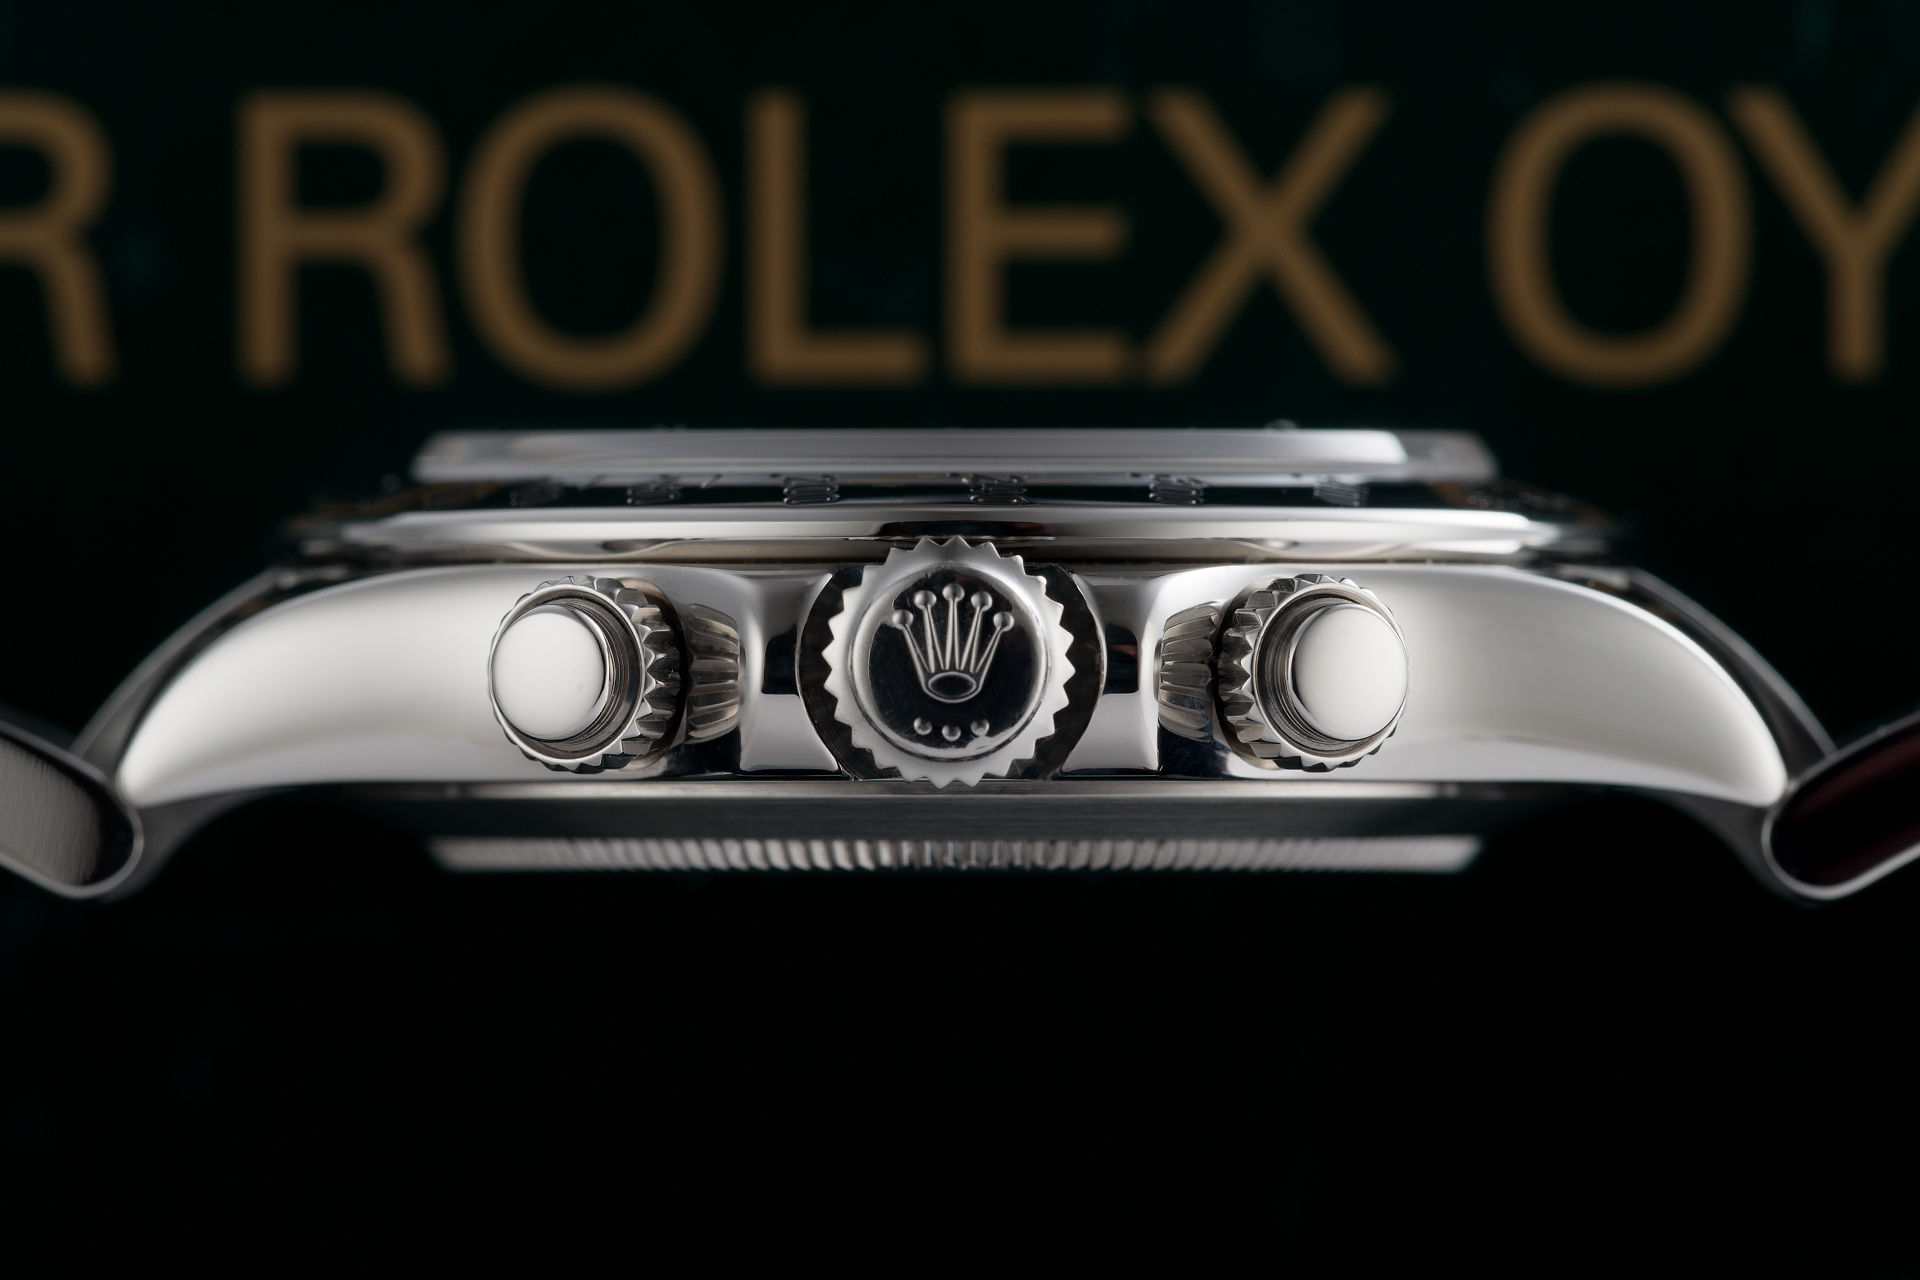 ref 116520 | Box, Certificate & Service History | Rolex Cosmograph Daytona